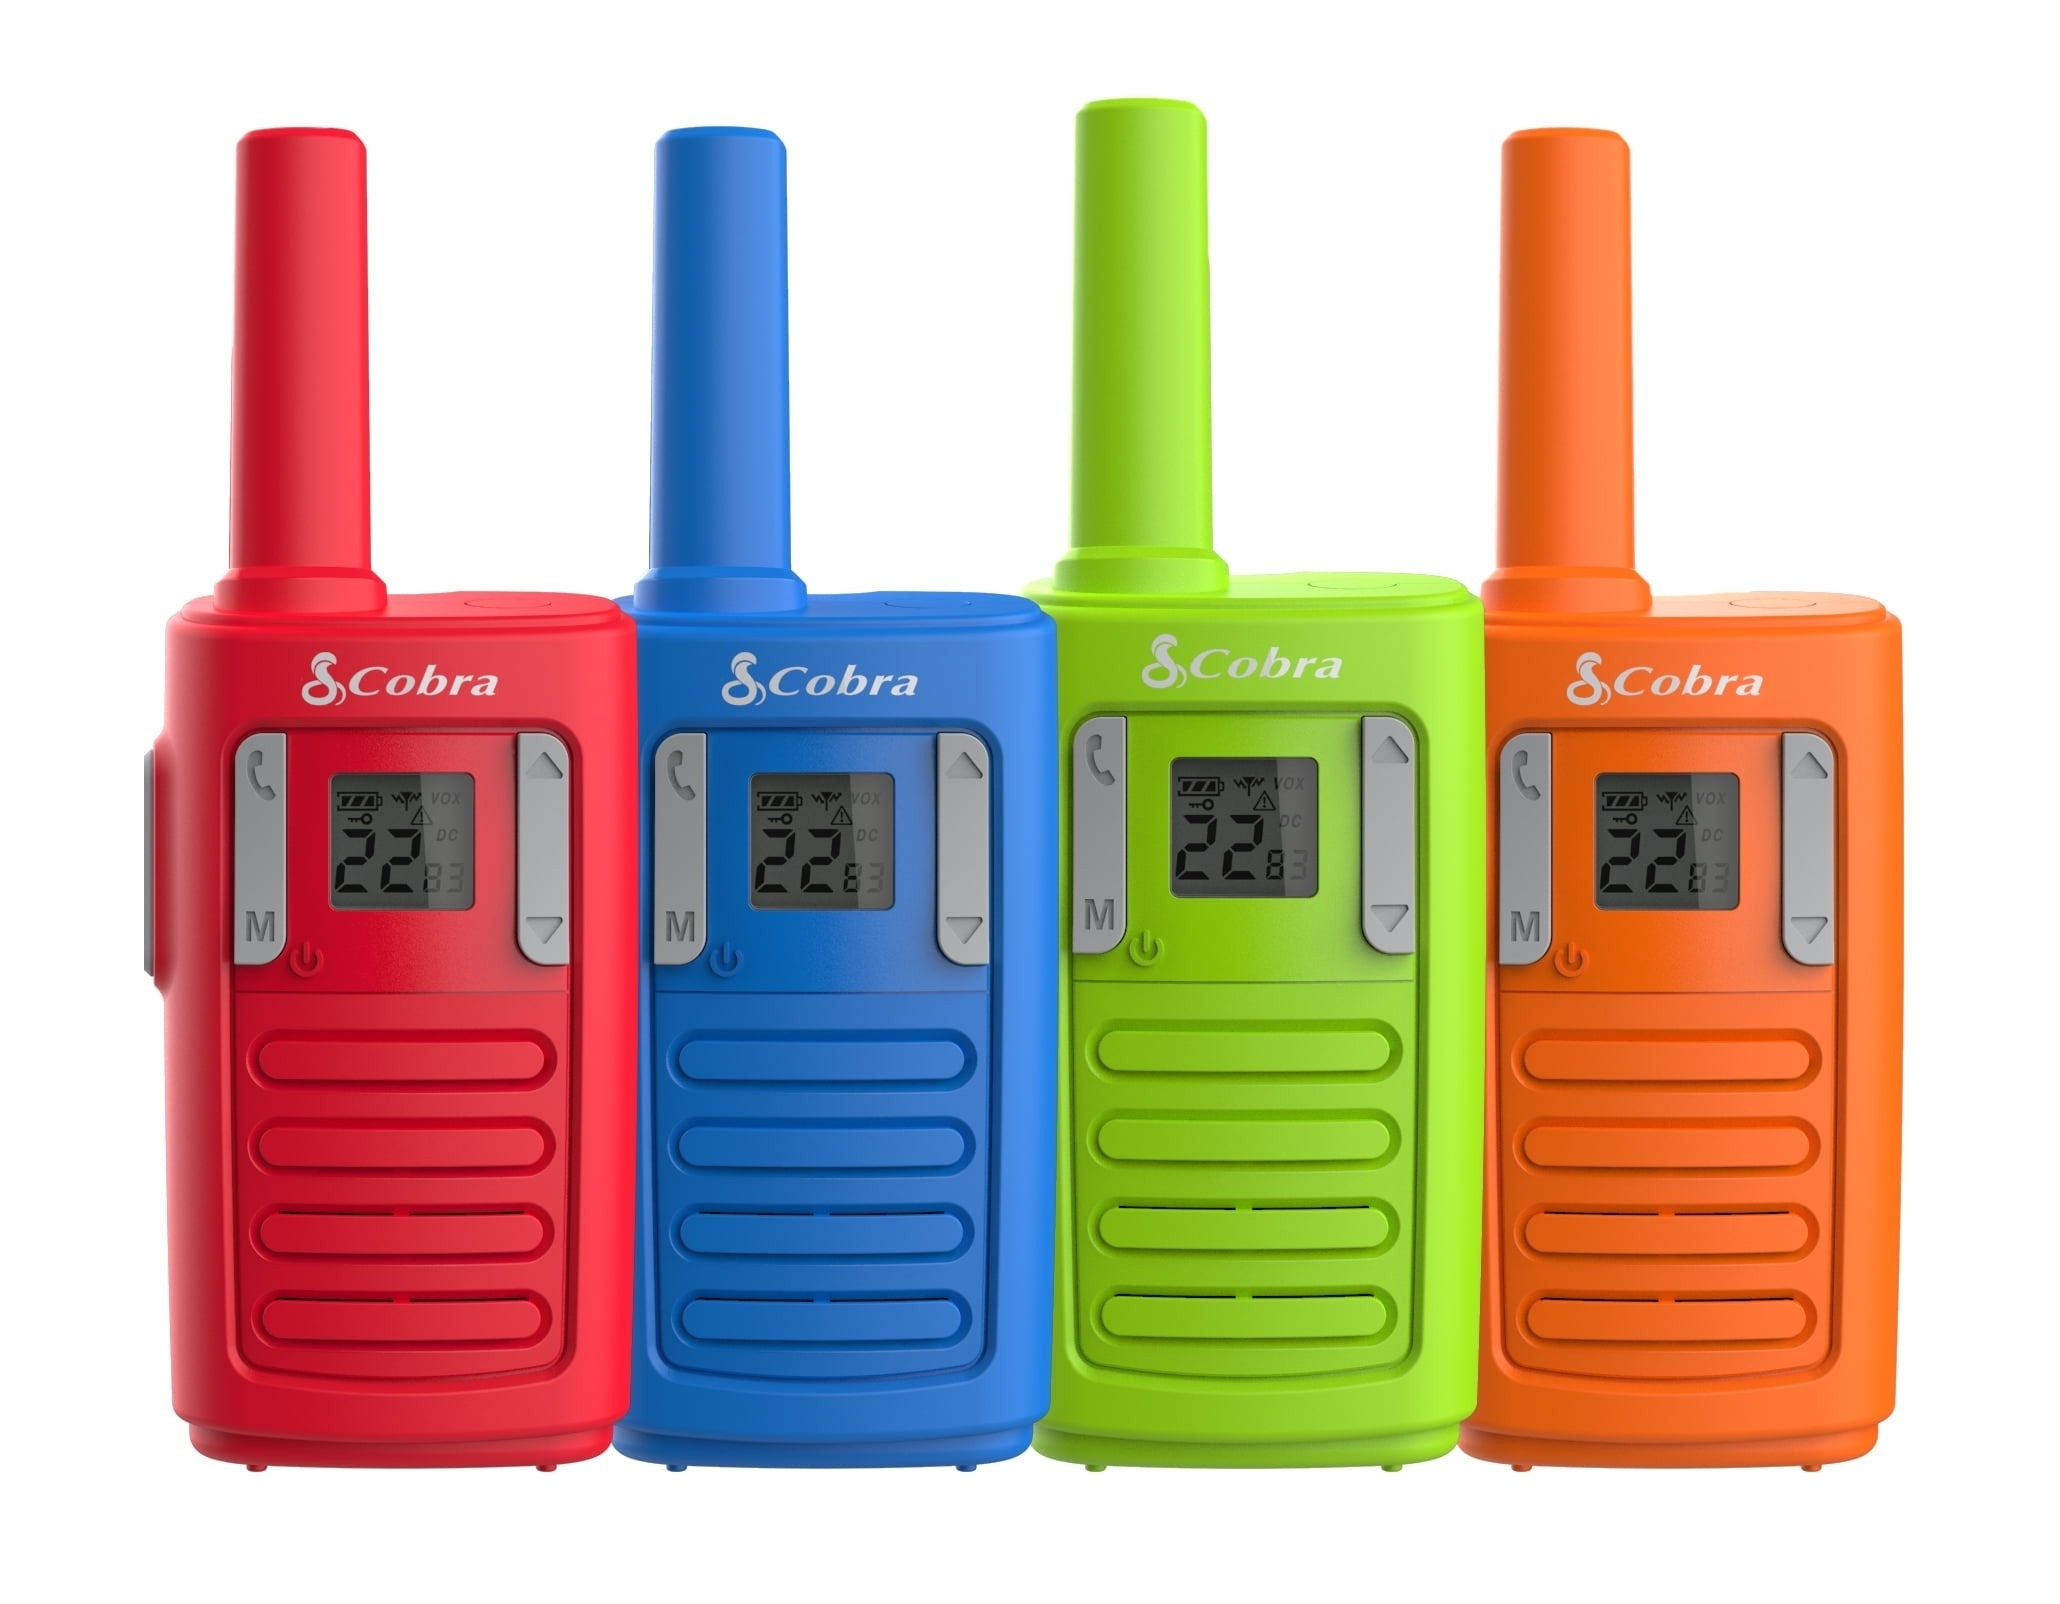 A set of four walkie talkies